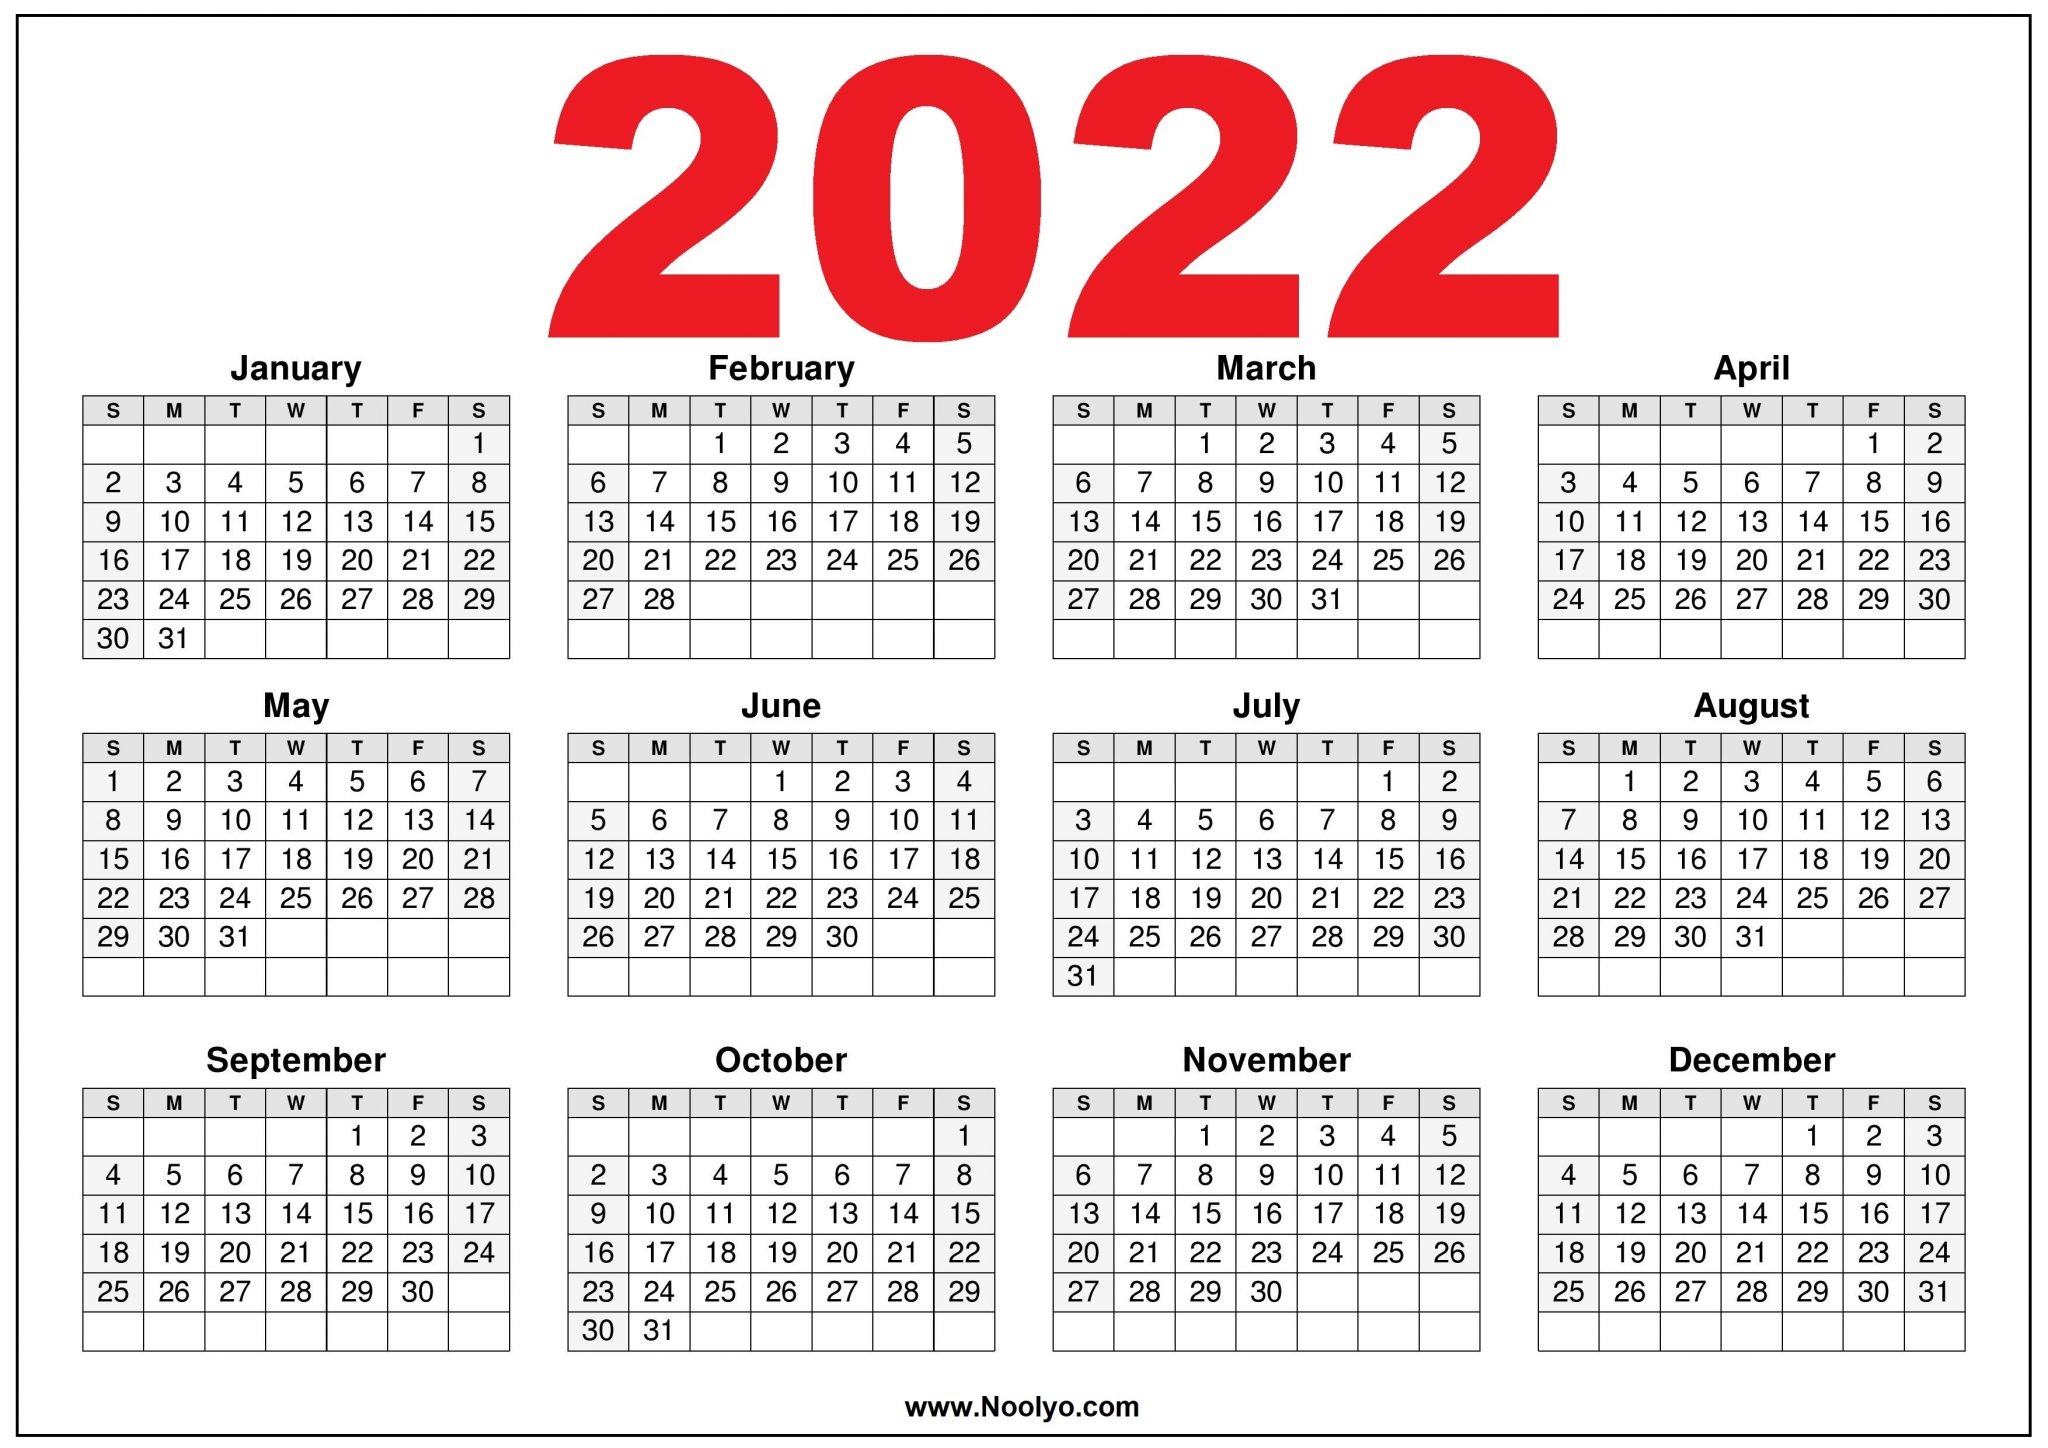 2022 Calendar Printable Us  Download Free  Noolyo with regard to 2022 Fiscal Calendar Printable